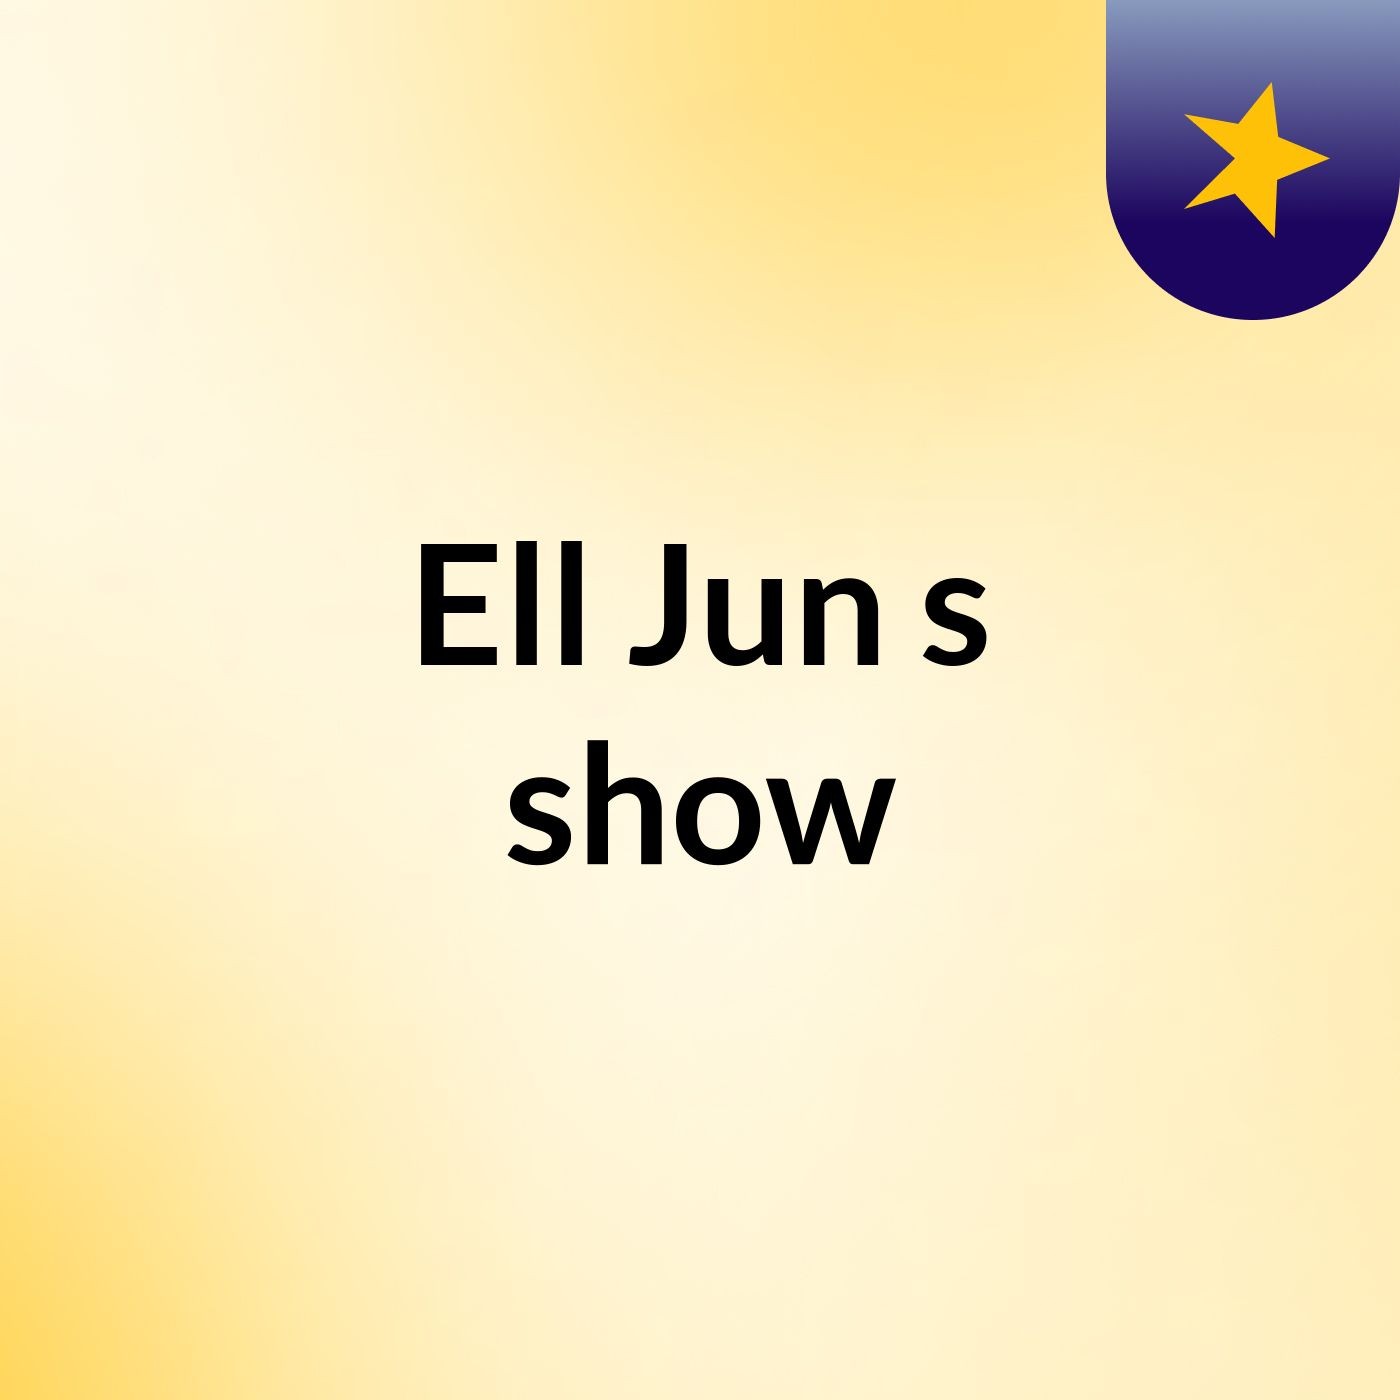 Ell Jun's show